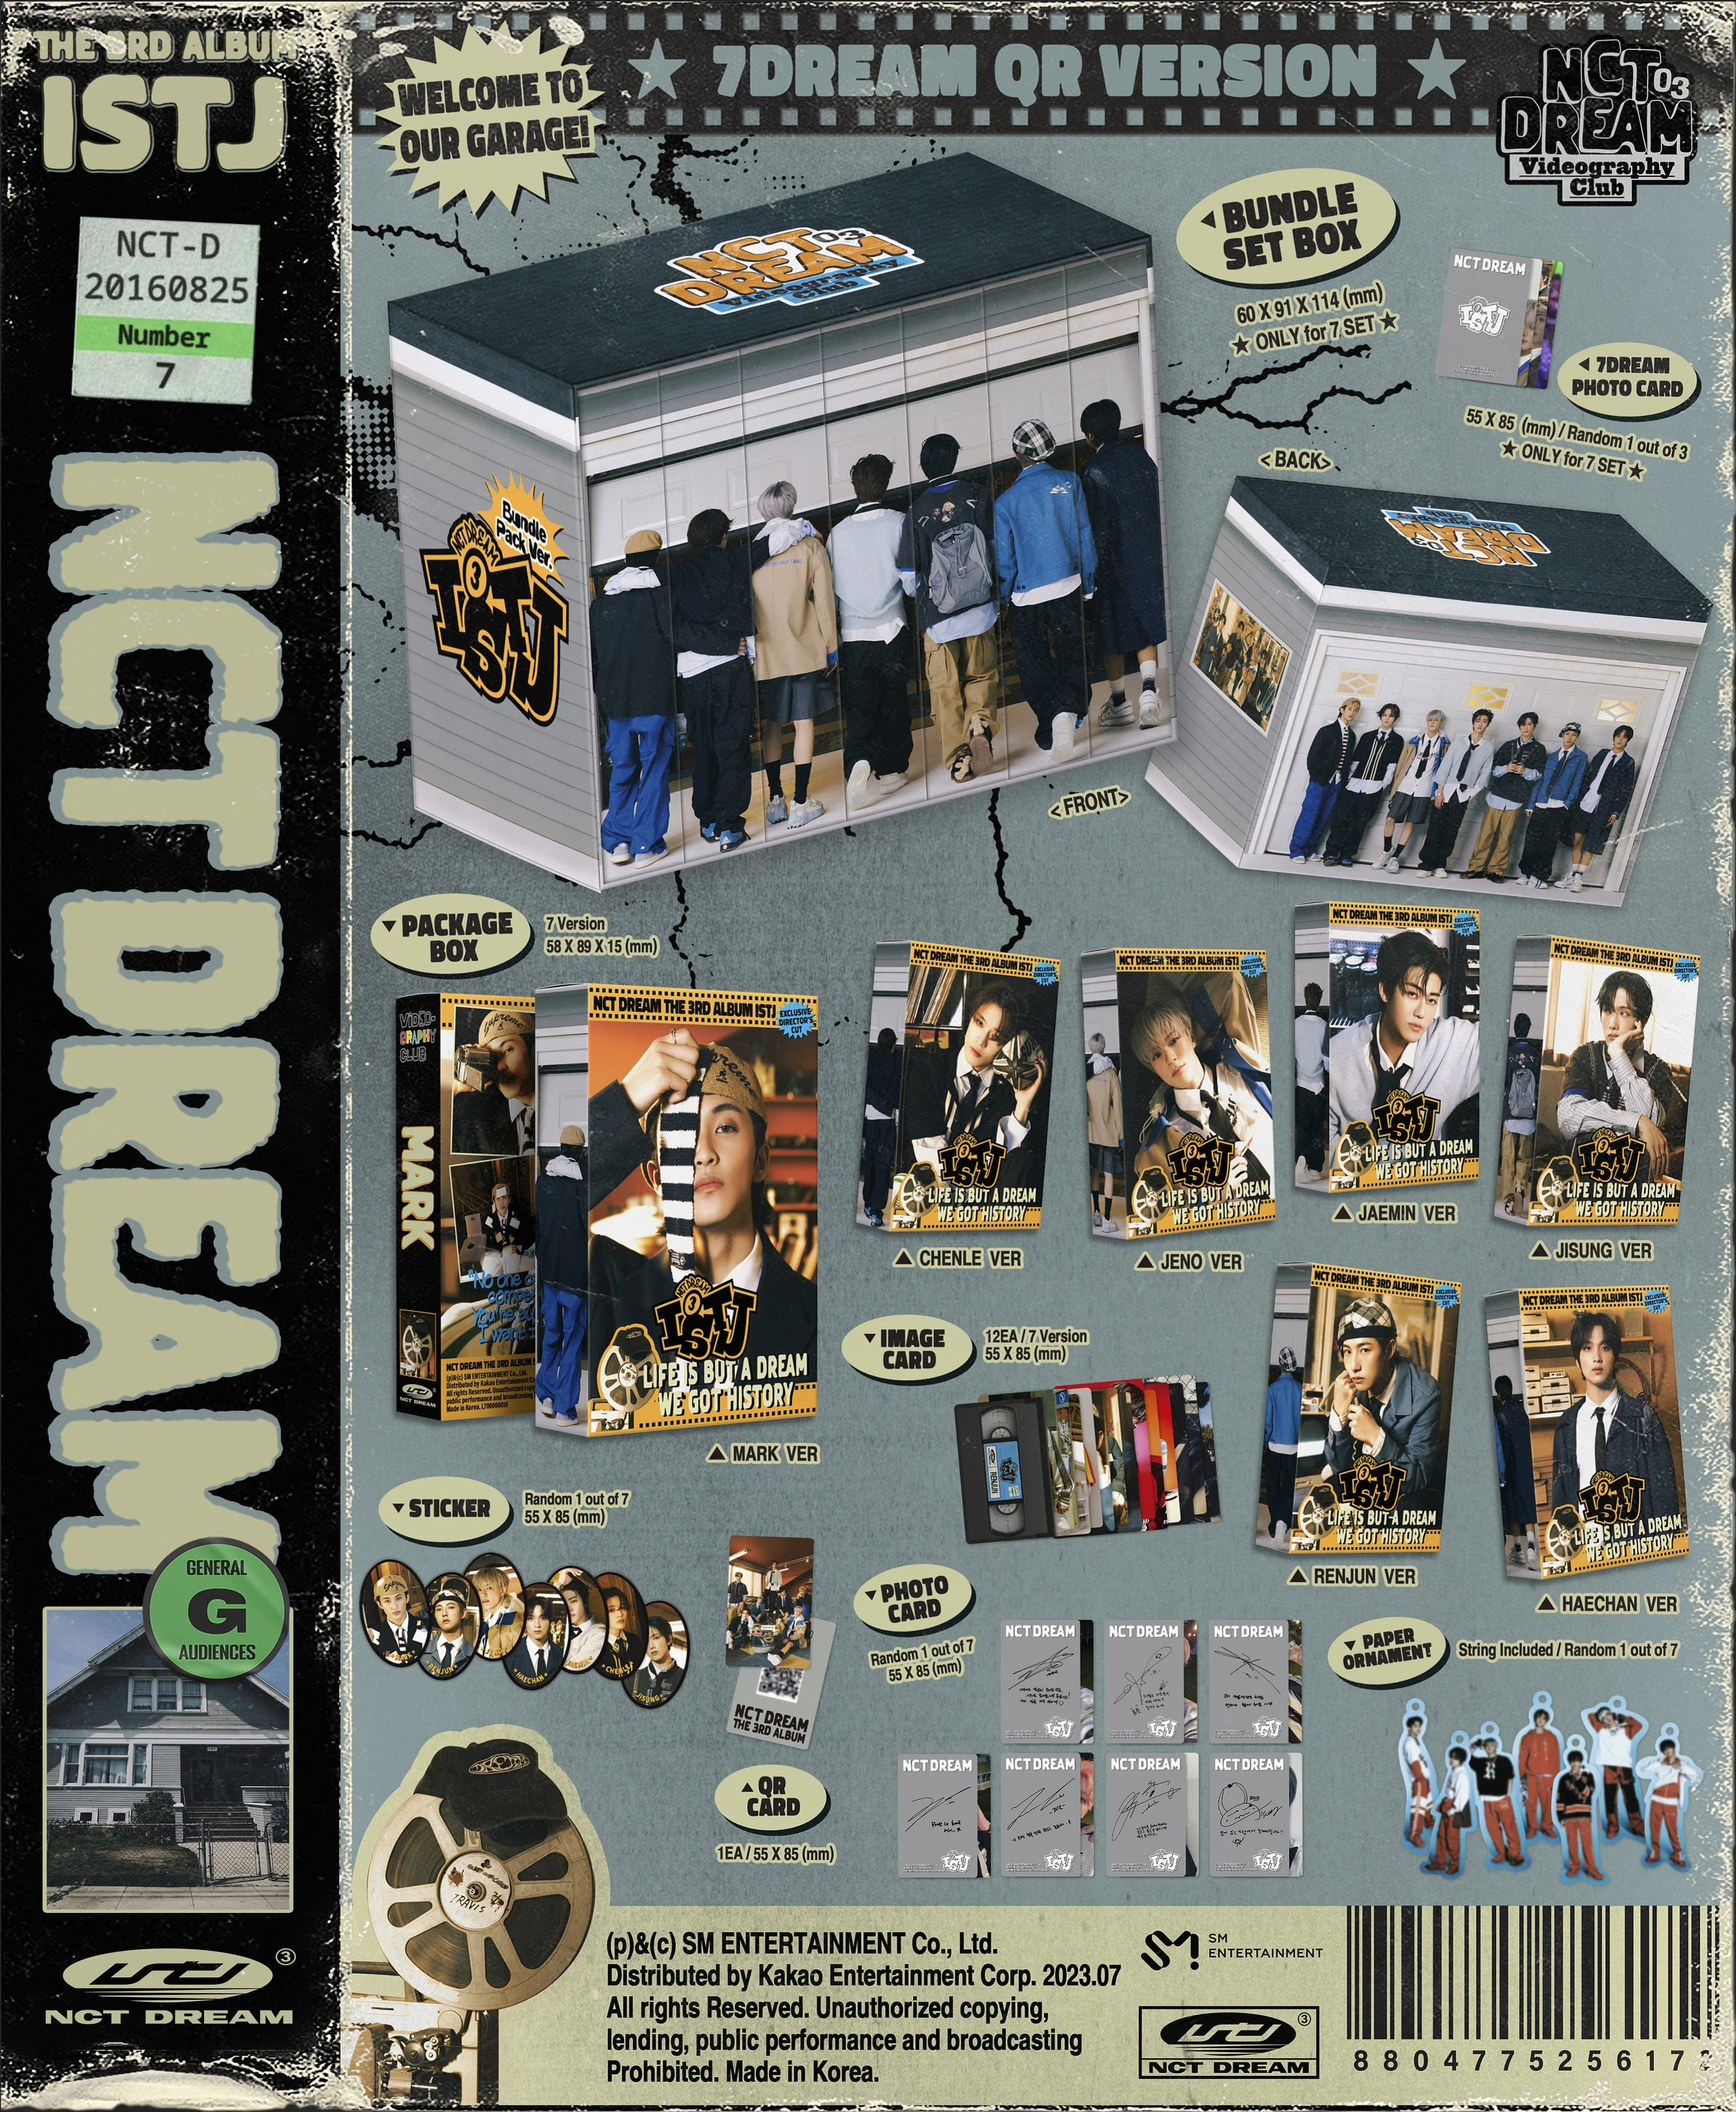 NCT DREAM 3rd Album ISTJ (7DREAM QR Version)